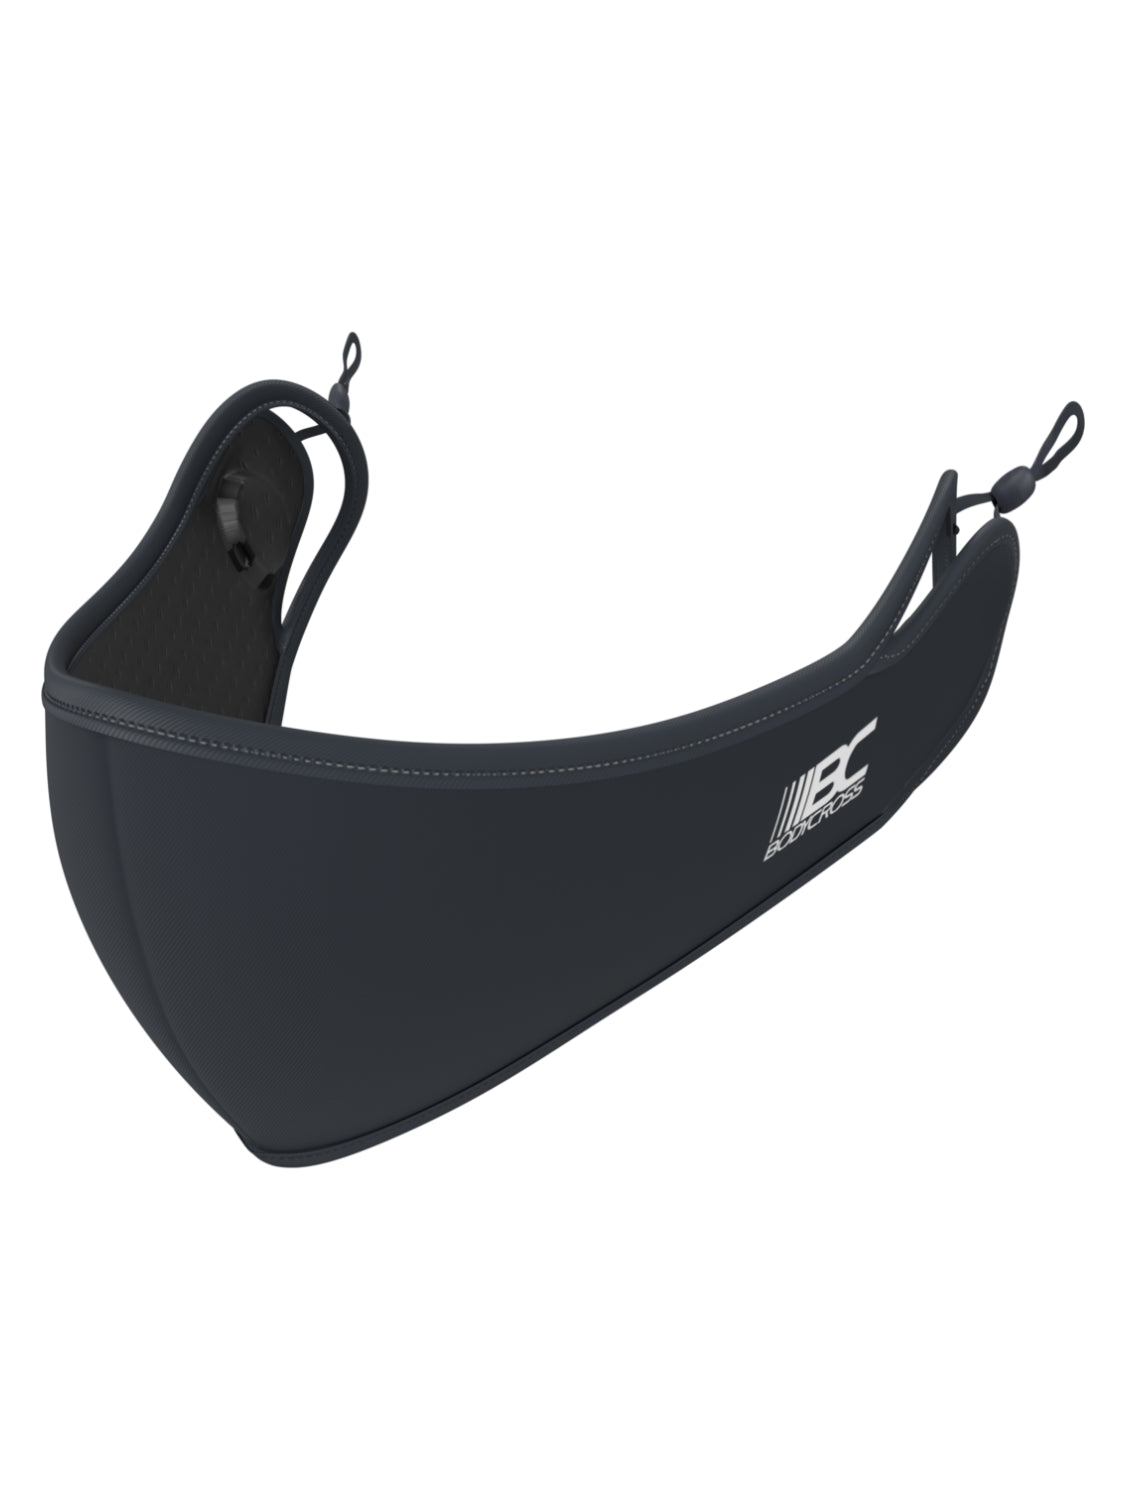 ARIEL Bluetooth waterproof sports mask